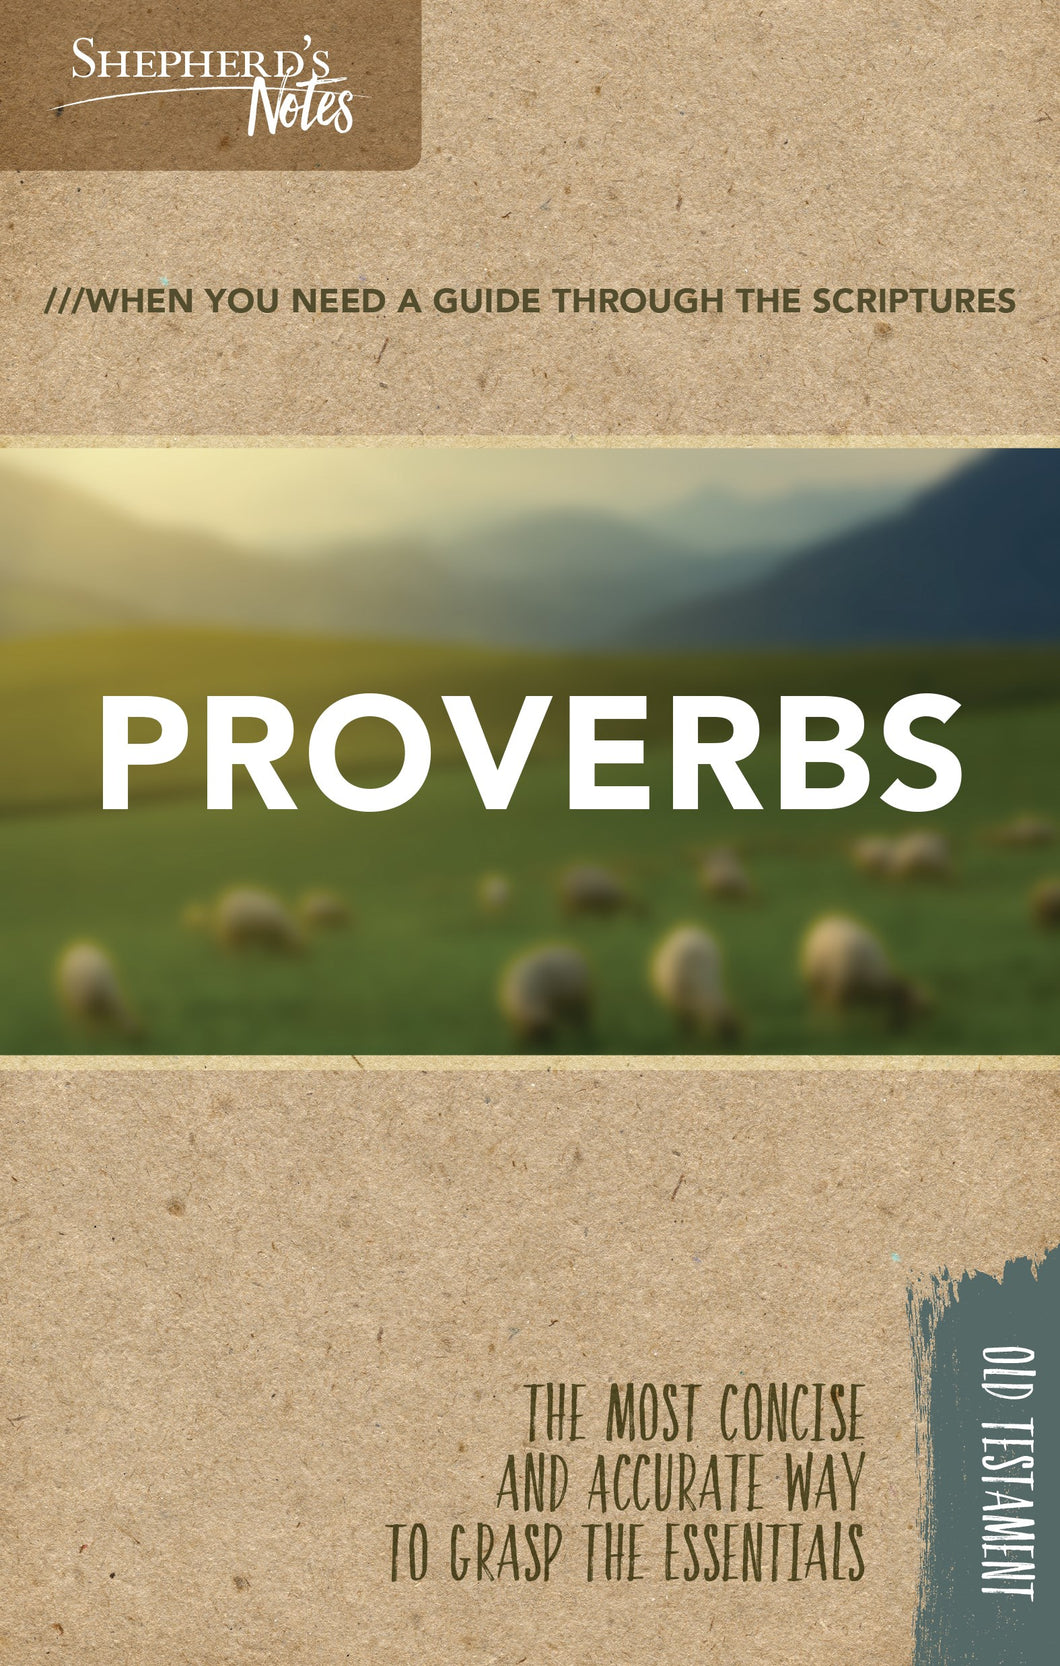 Proverbs (Shepherd's Notes)